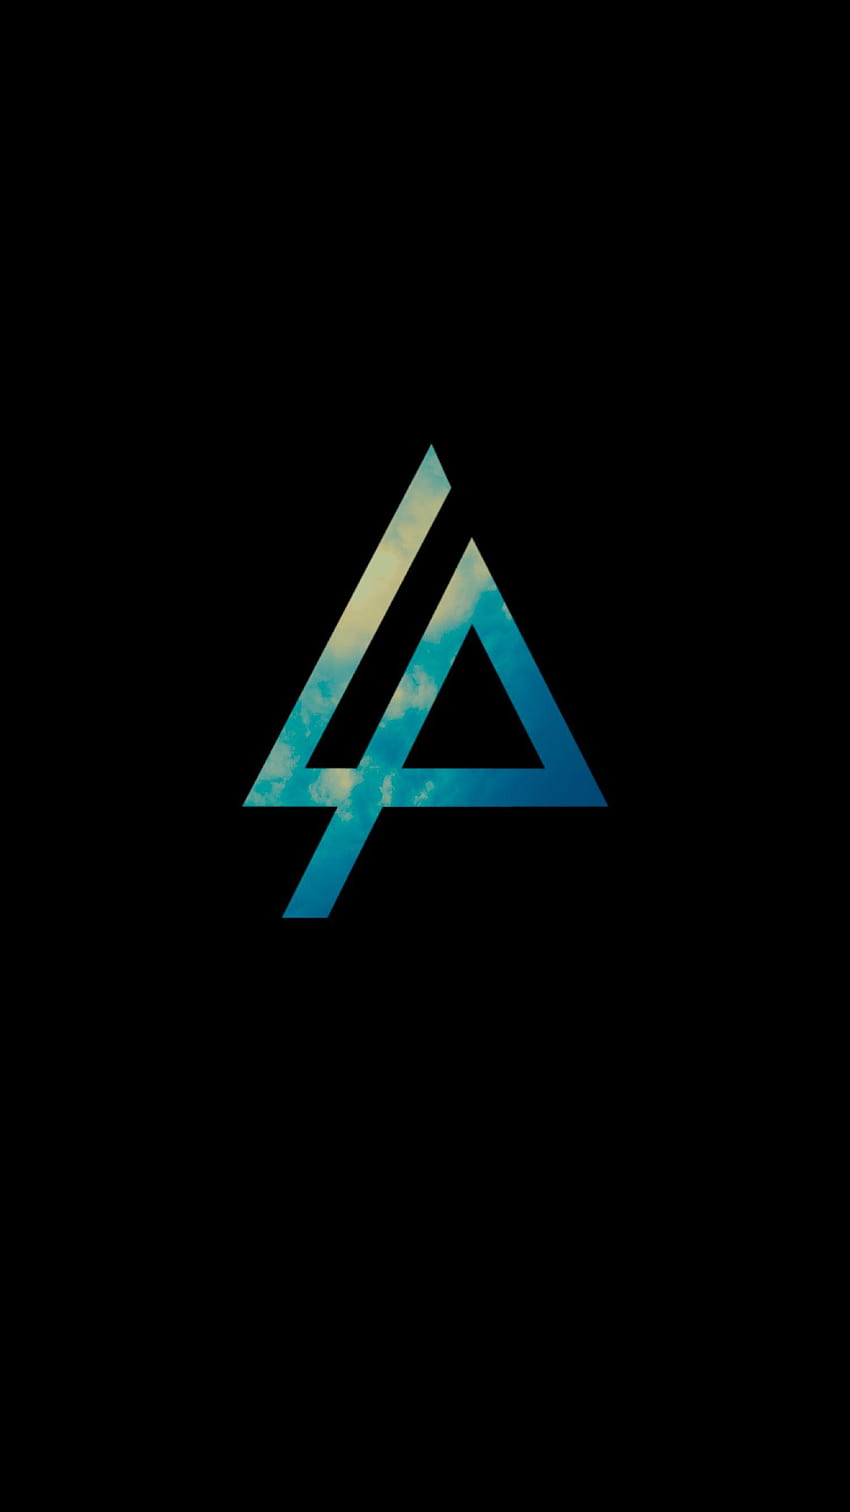 Linkin Park Logo HD phone wallpaper